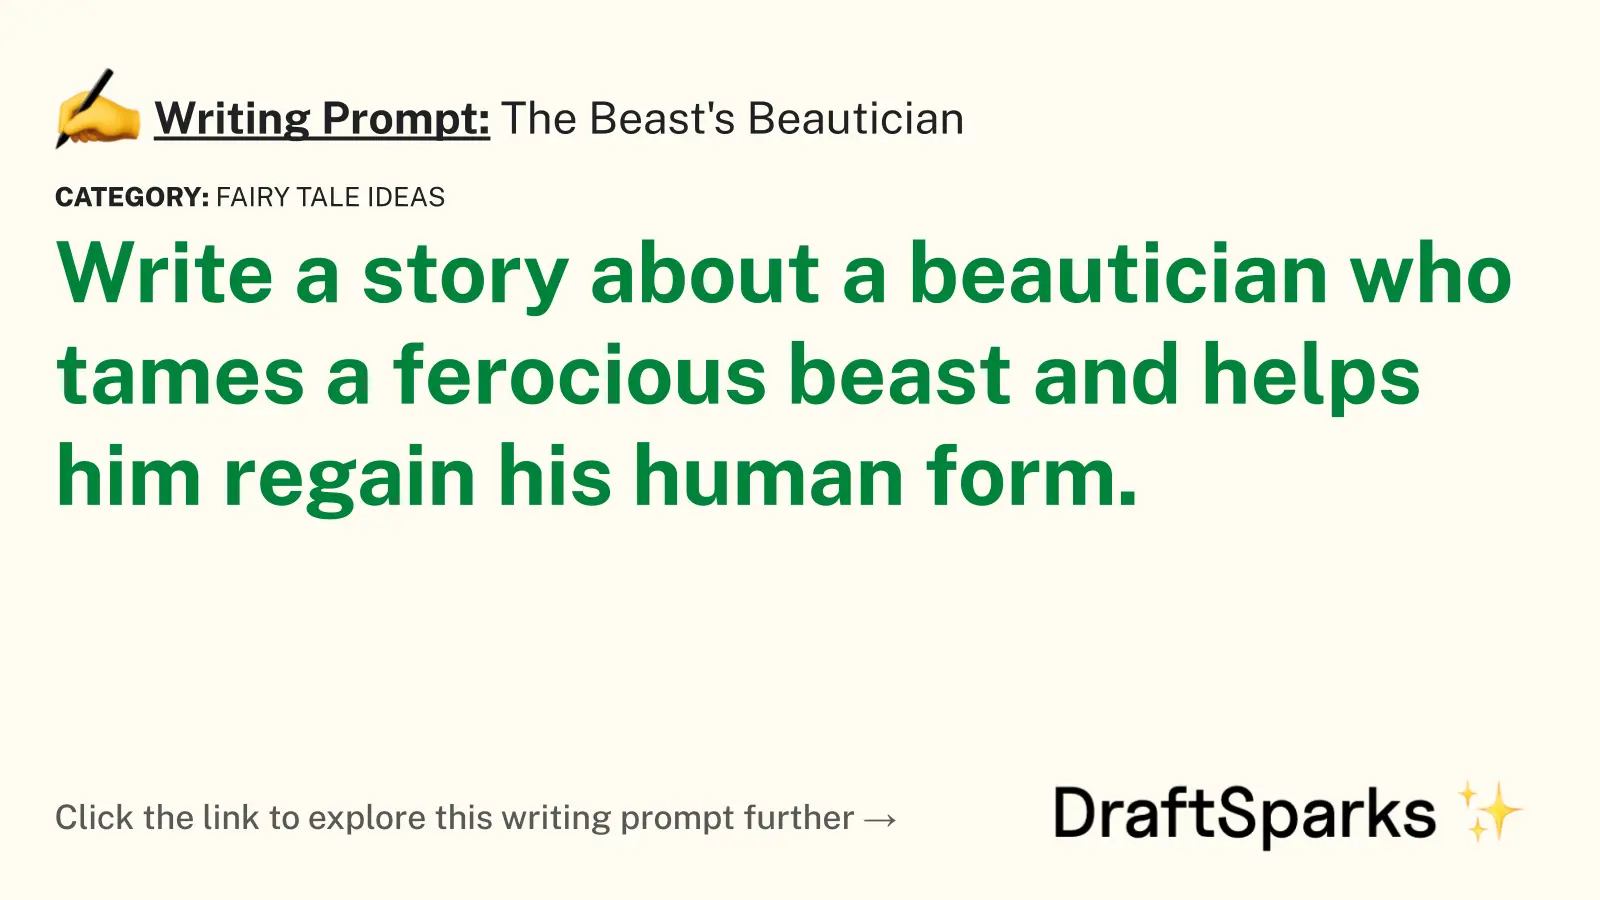 The Beast’s Beautician